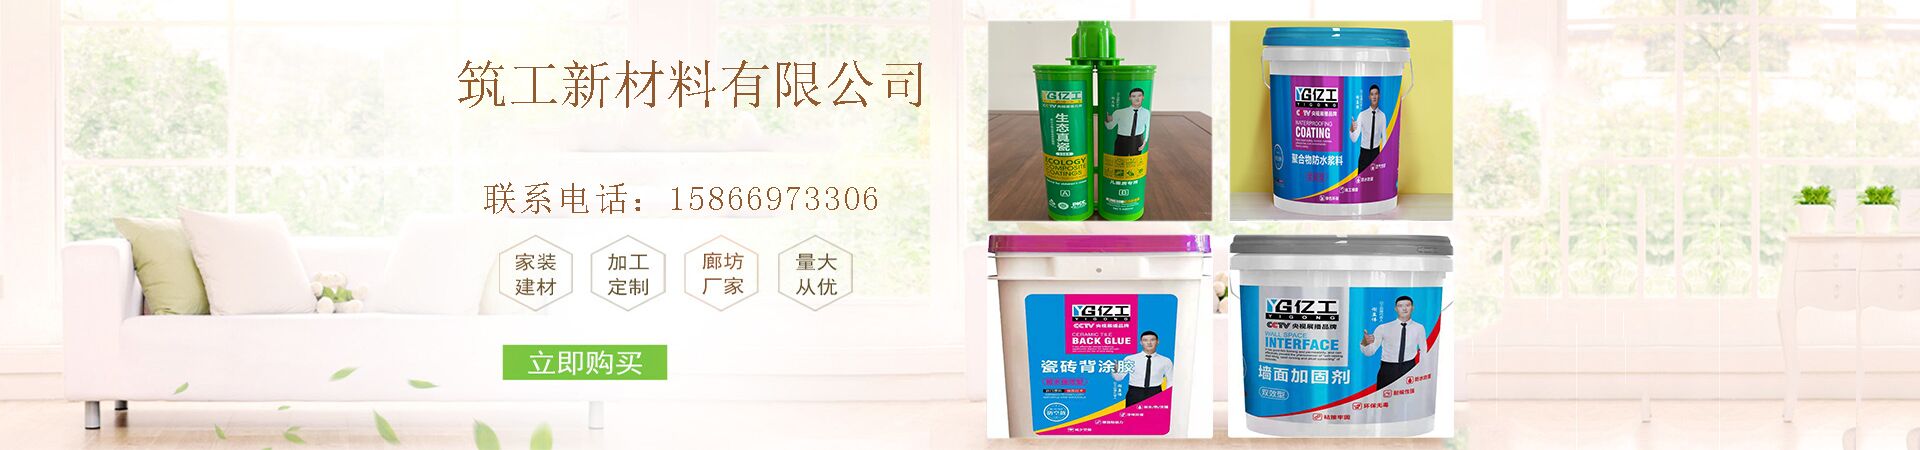 JS防水涂料、北京本地JS防水涂料、北京、北京JS防水涂料